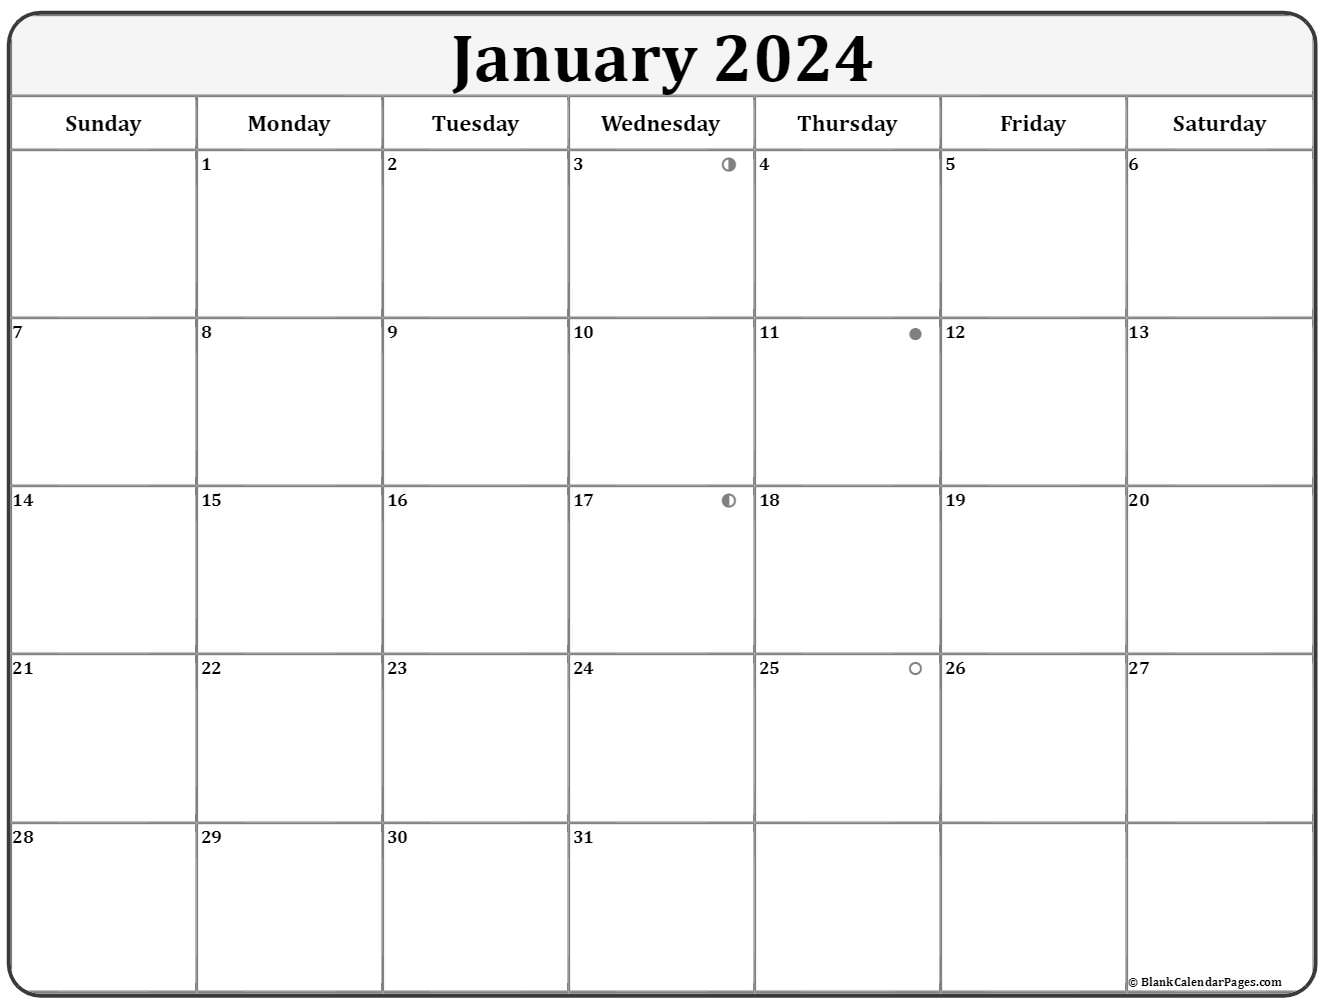 lunar-calendar-2023-usa-calendar-march-2023-lunar-moon-phase-printable